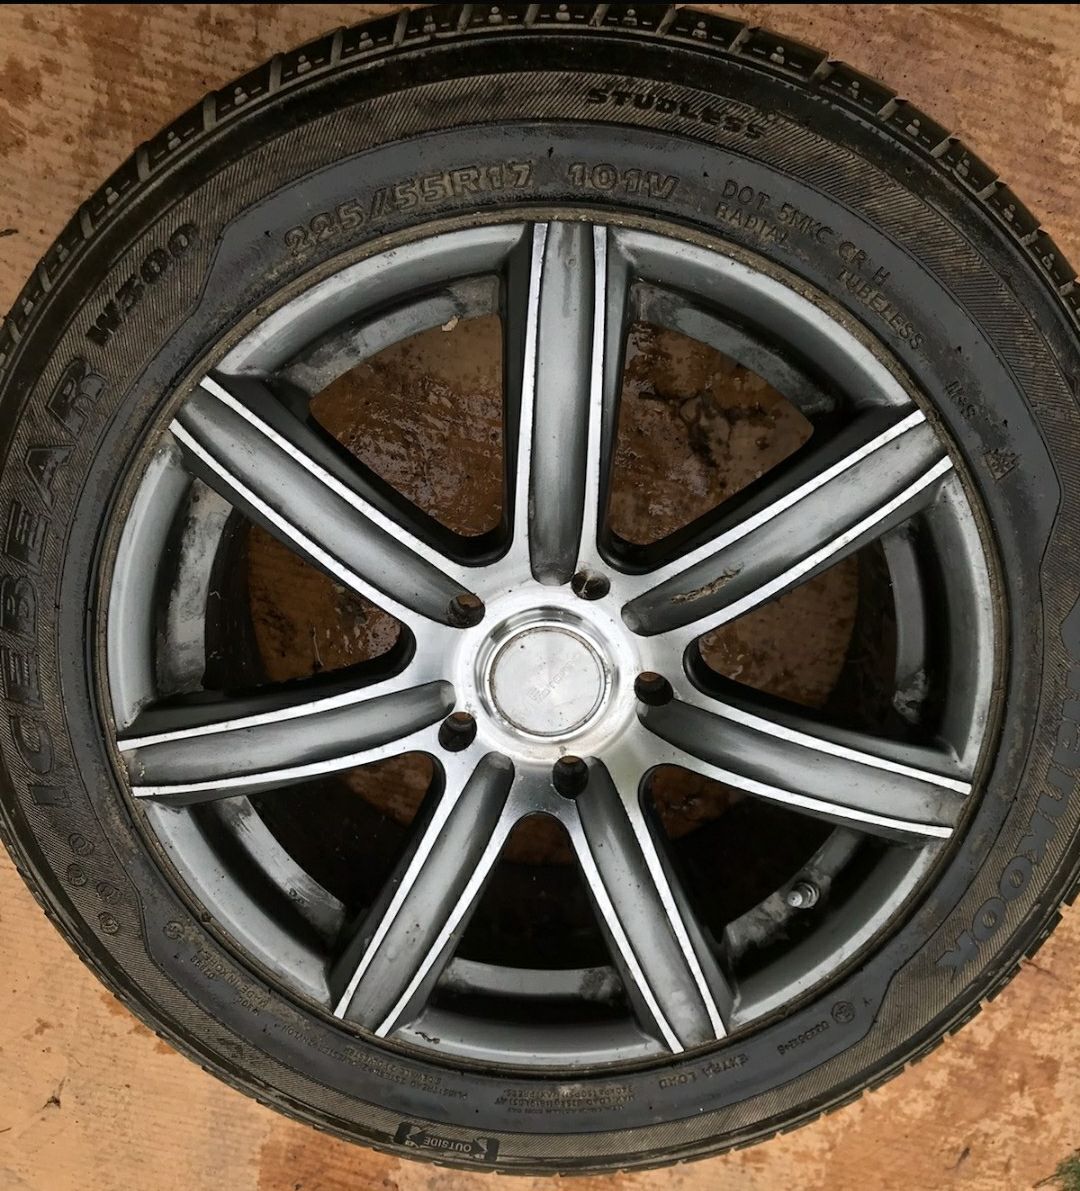 (4) MB Motoring Wheels w/ Icebear Tires